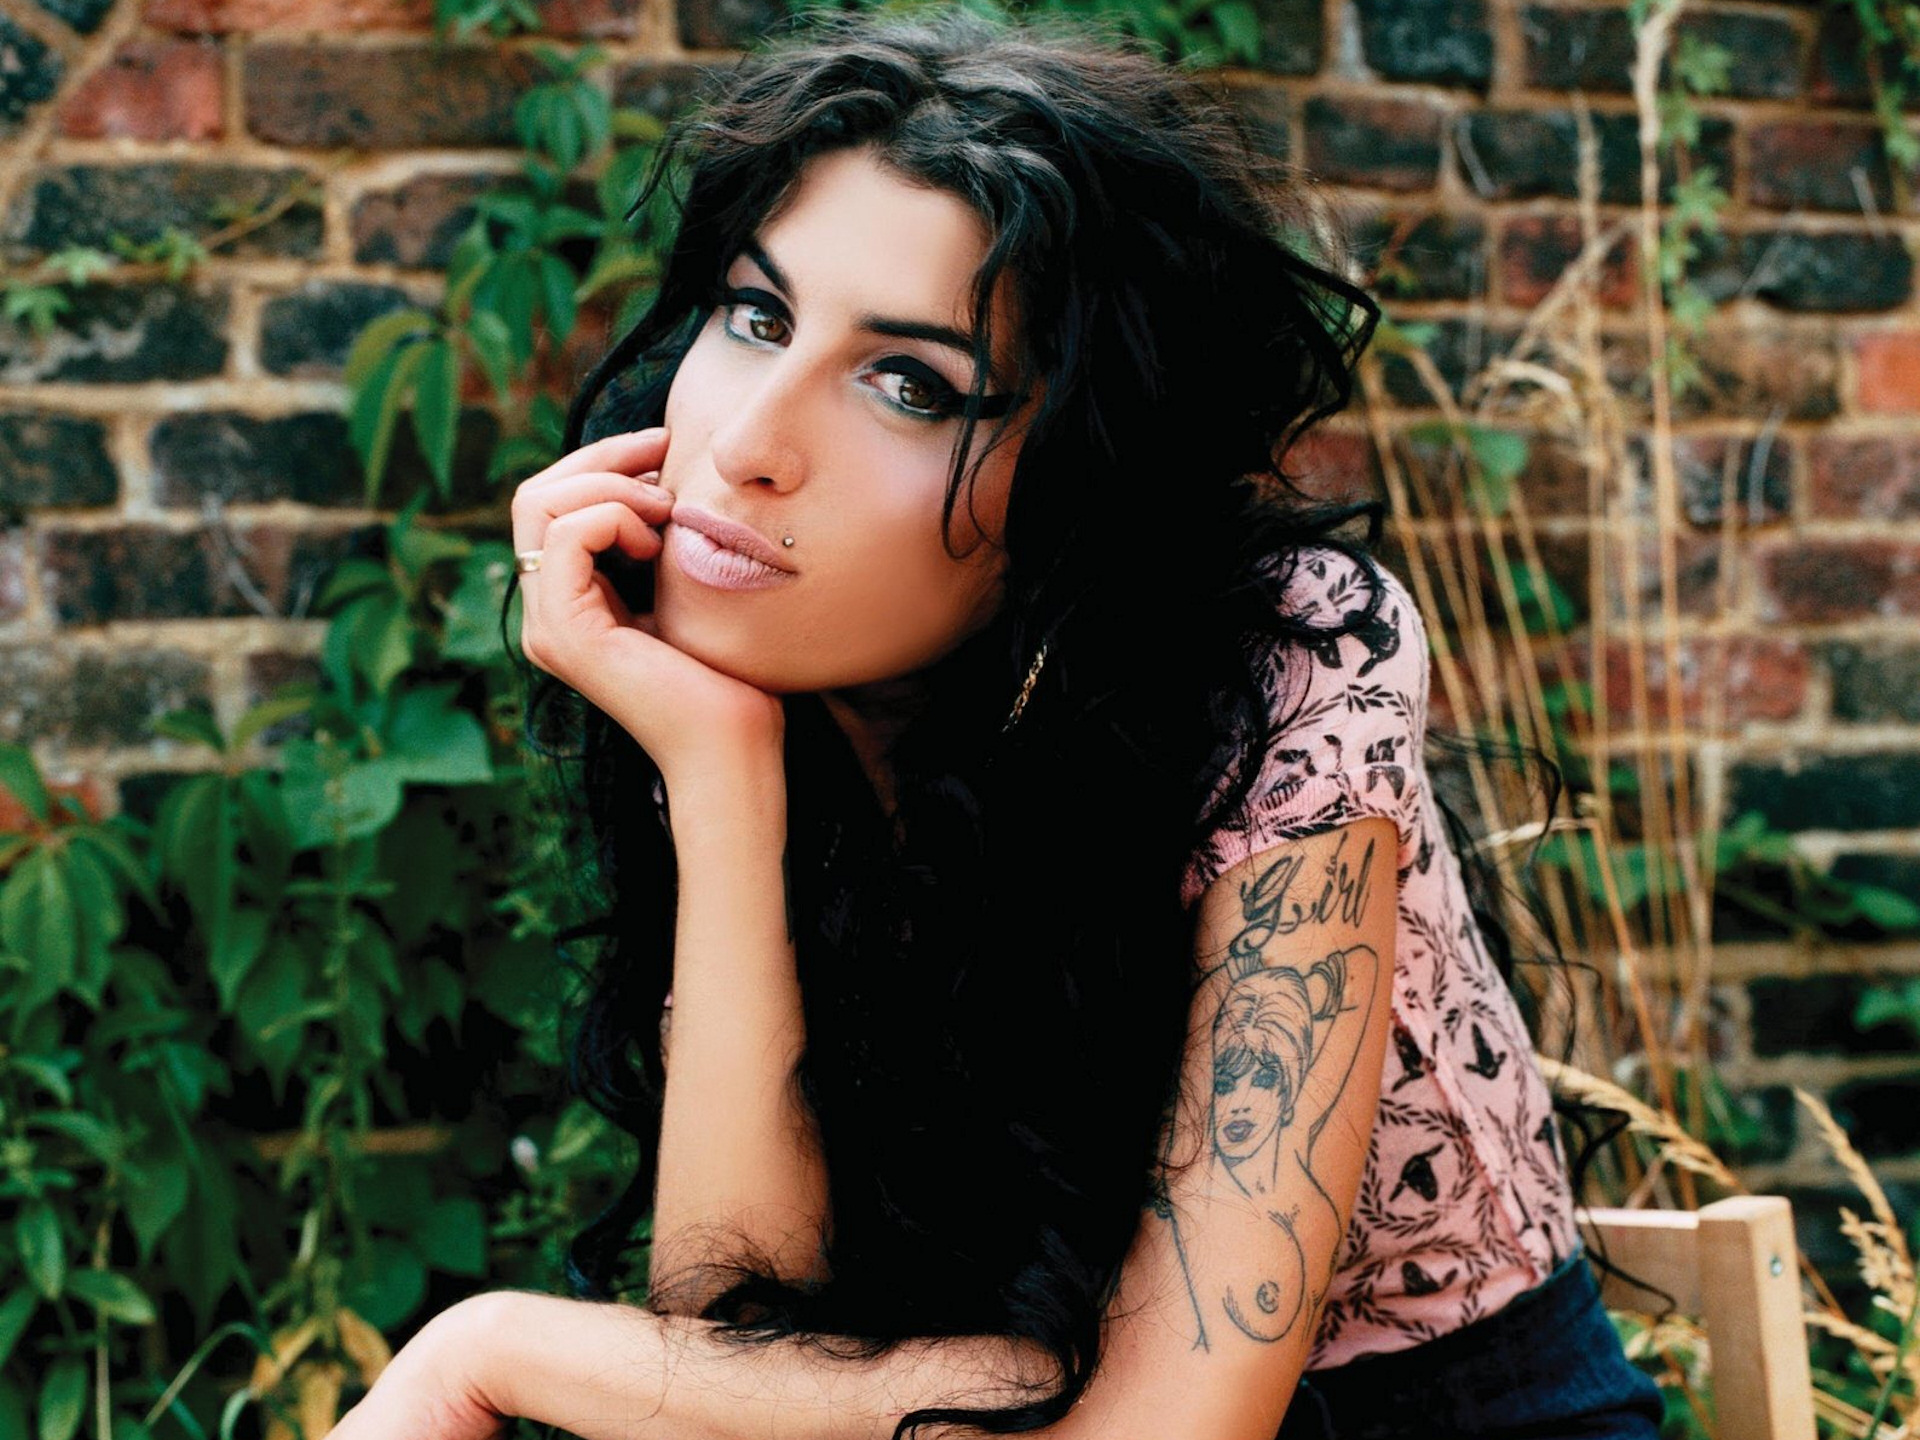 Amy_Winehouse_02_1920x1440.jpg